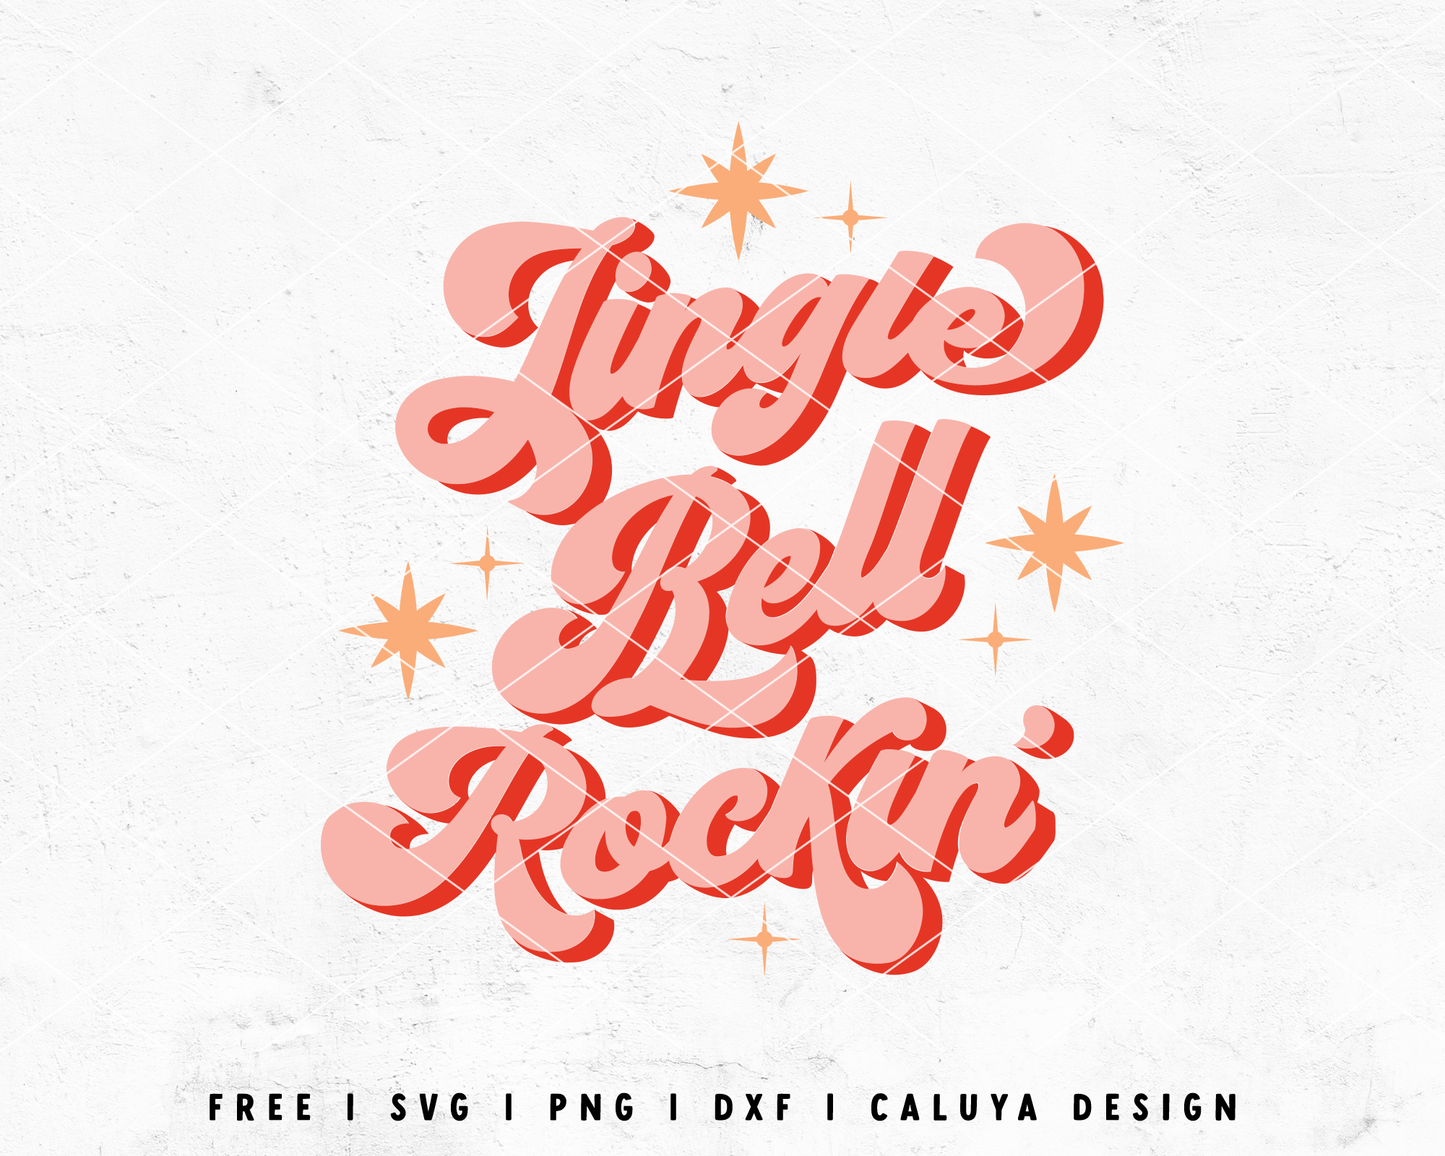 FREE Jingle Bell Rockin' SVG | Retro Christmas SVG Cut File for Cricut, Cameo Silhouette | Free SVG Cut File